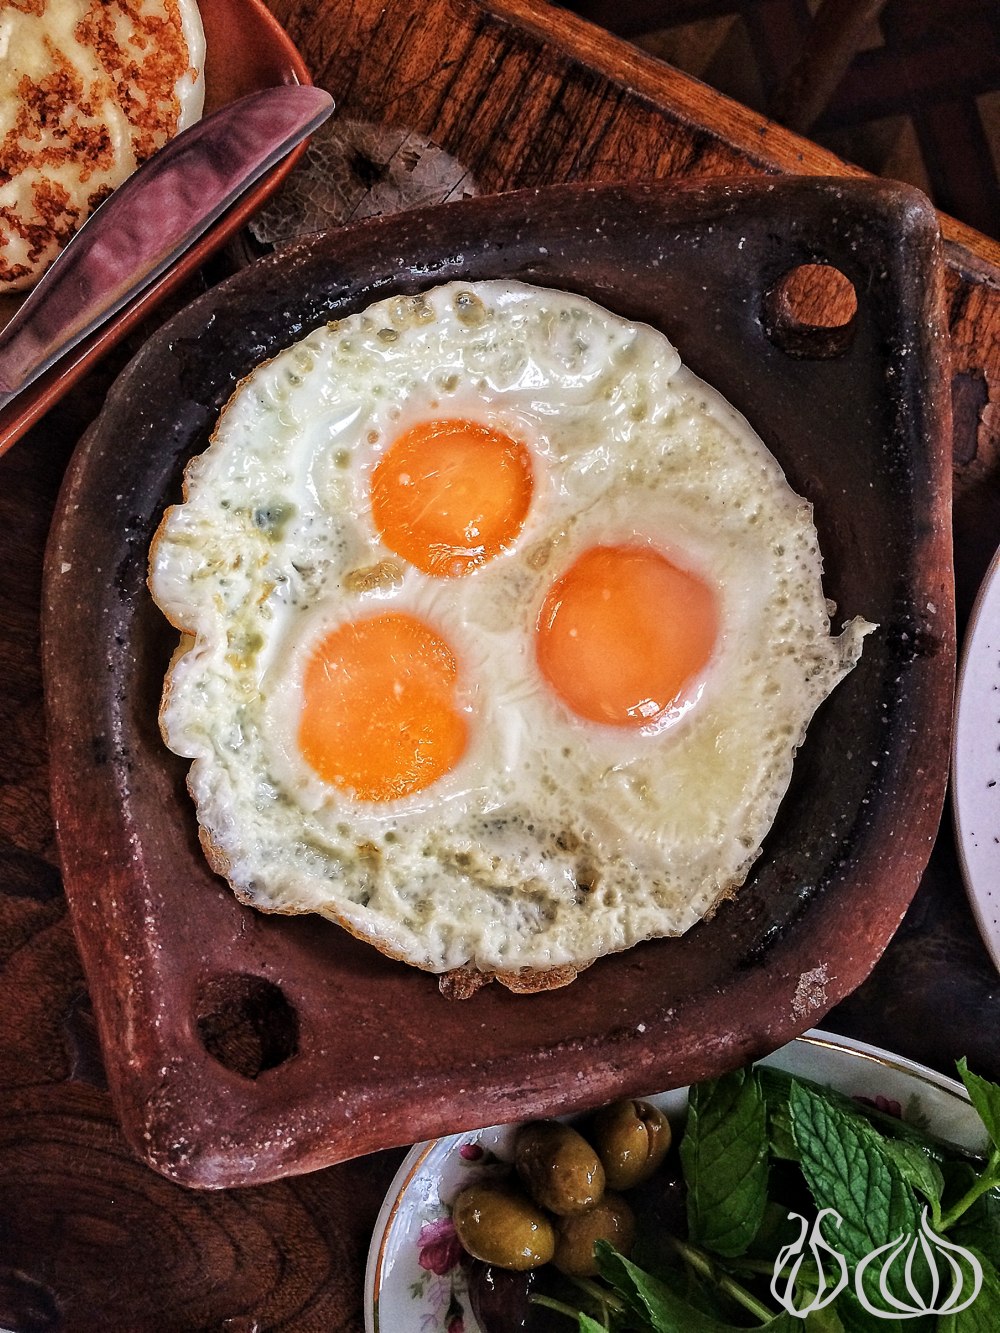 al-falamanki-restaurant-special-breakfast-labneh-cheese-eggs372014-09-15-09-28-26